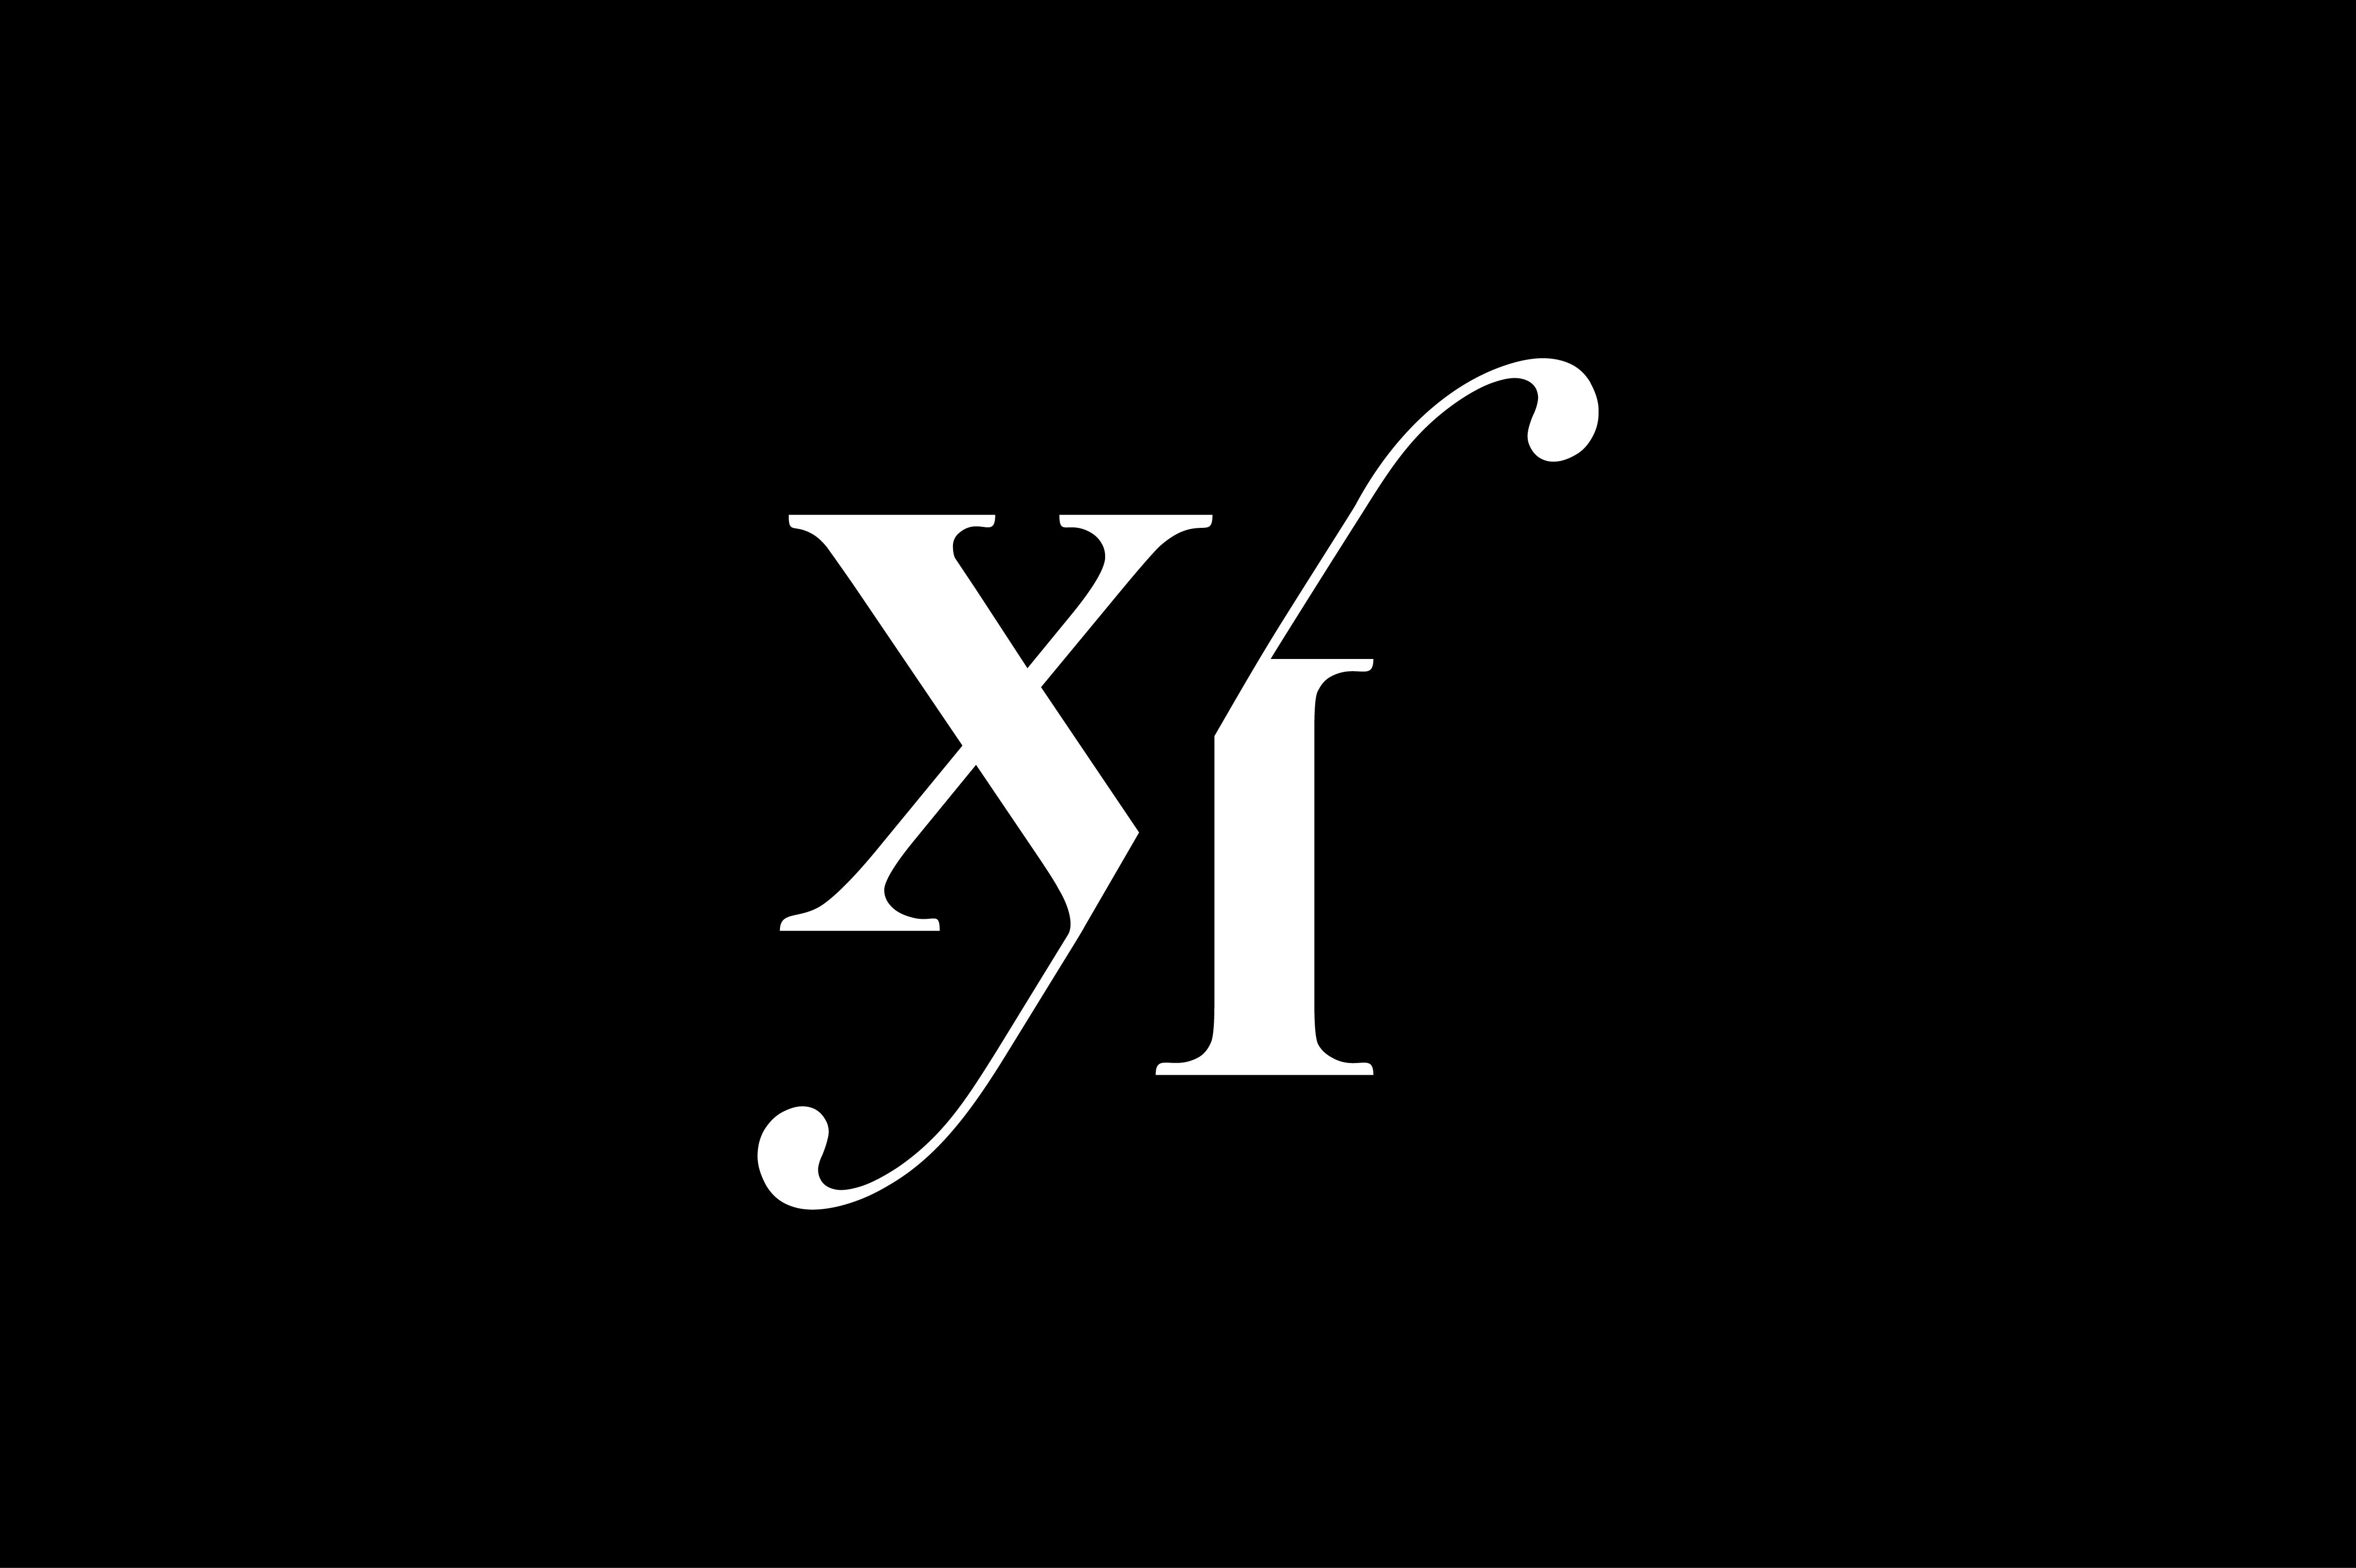 Xi Monogram Logo Design By Vectorseller Thehungryjpeg Com